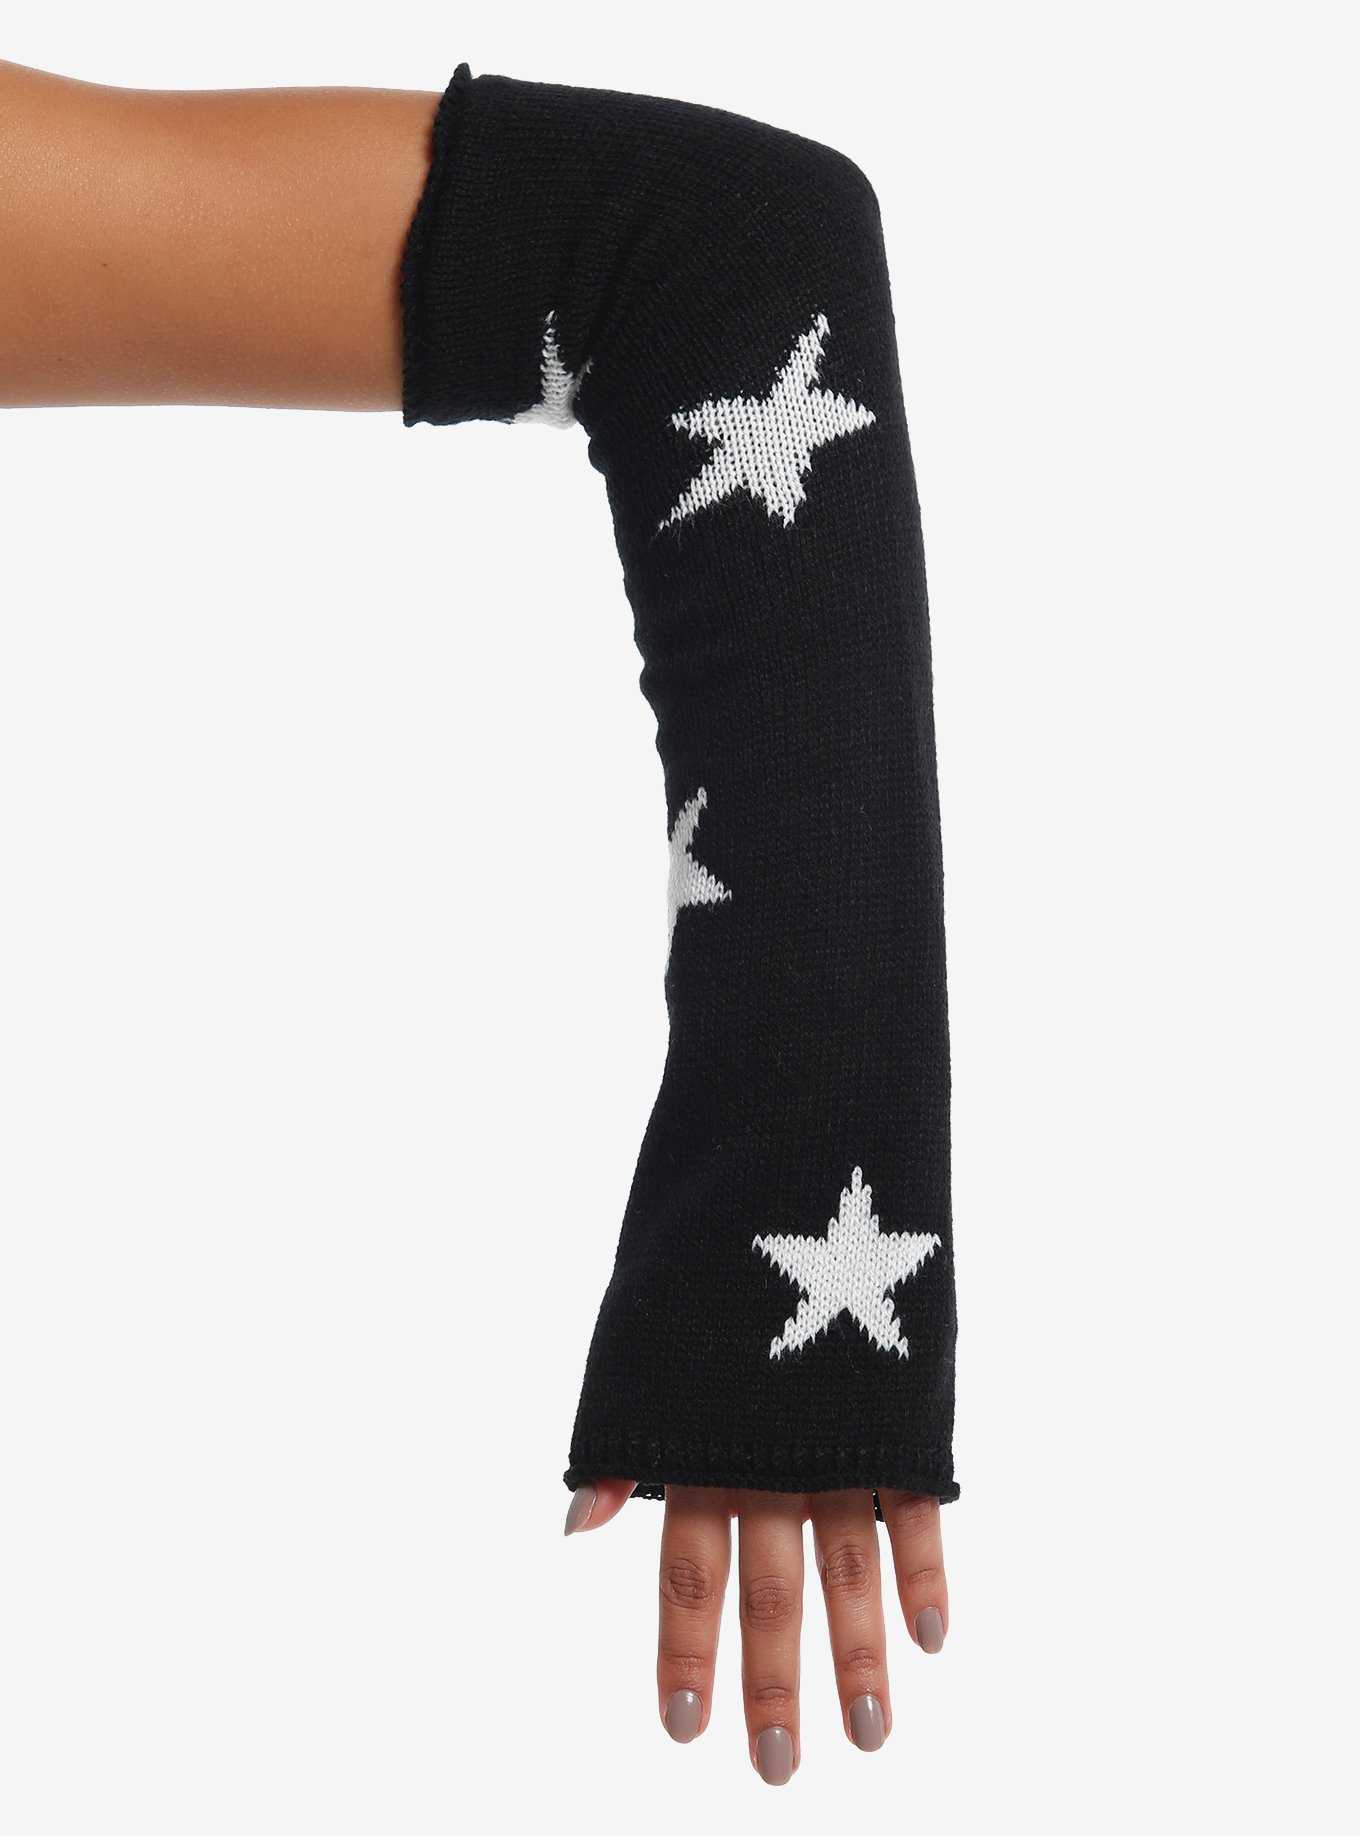 Black & White Star Flared Arm Warmers, , hi-res